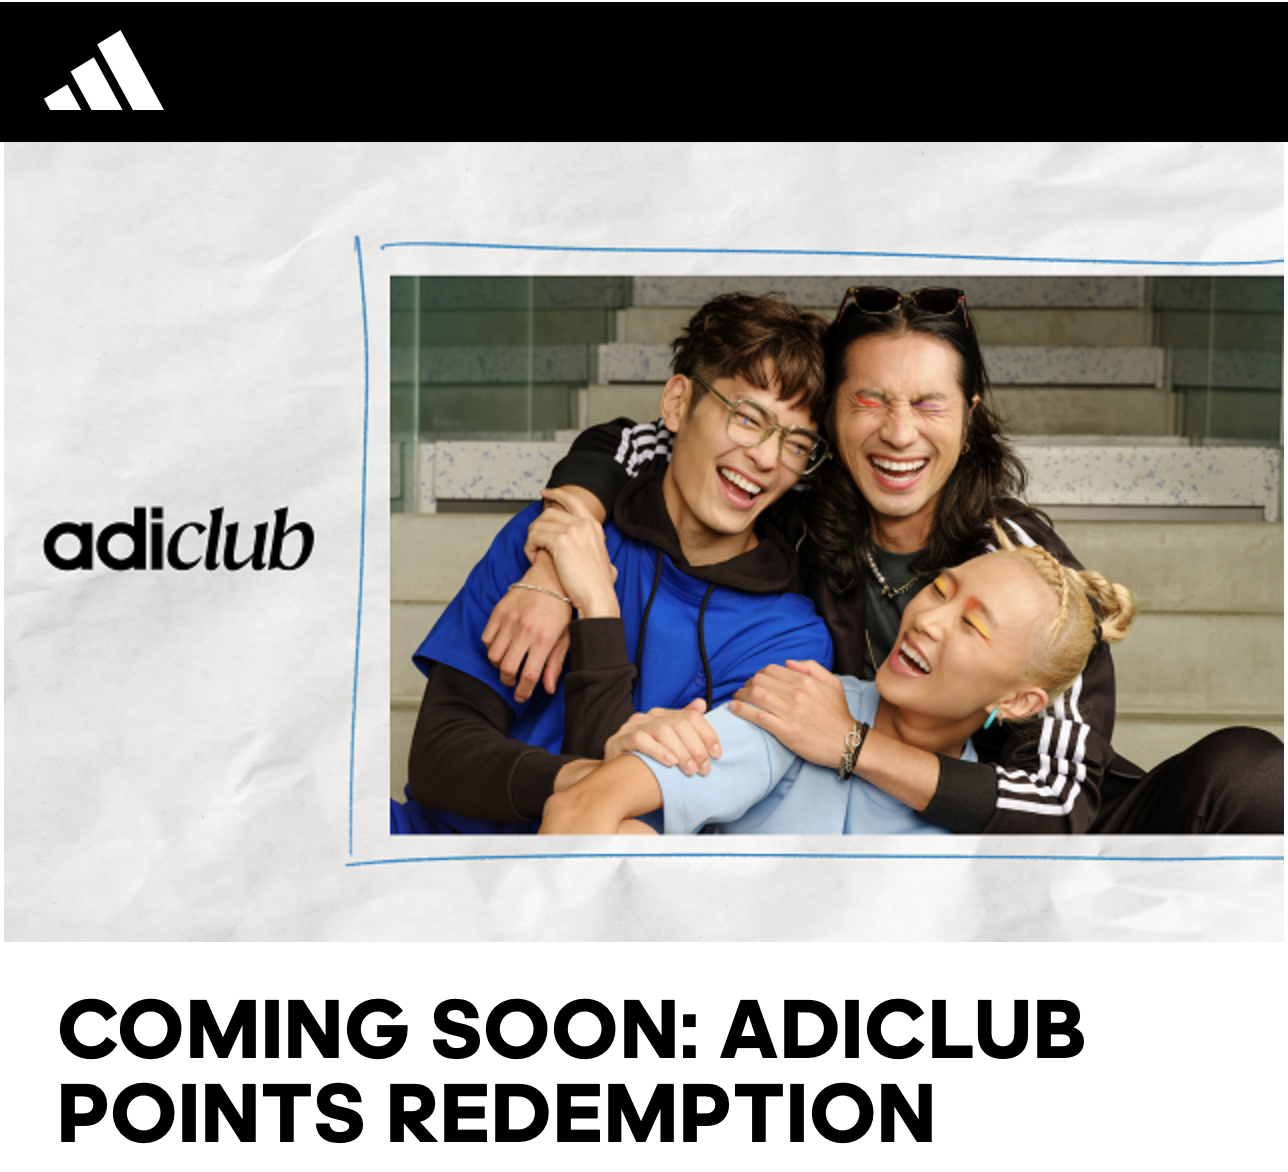 Adidas-media-feauture-adiclub-coco creative studio-singapore-france